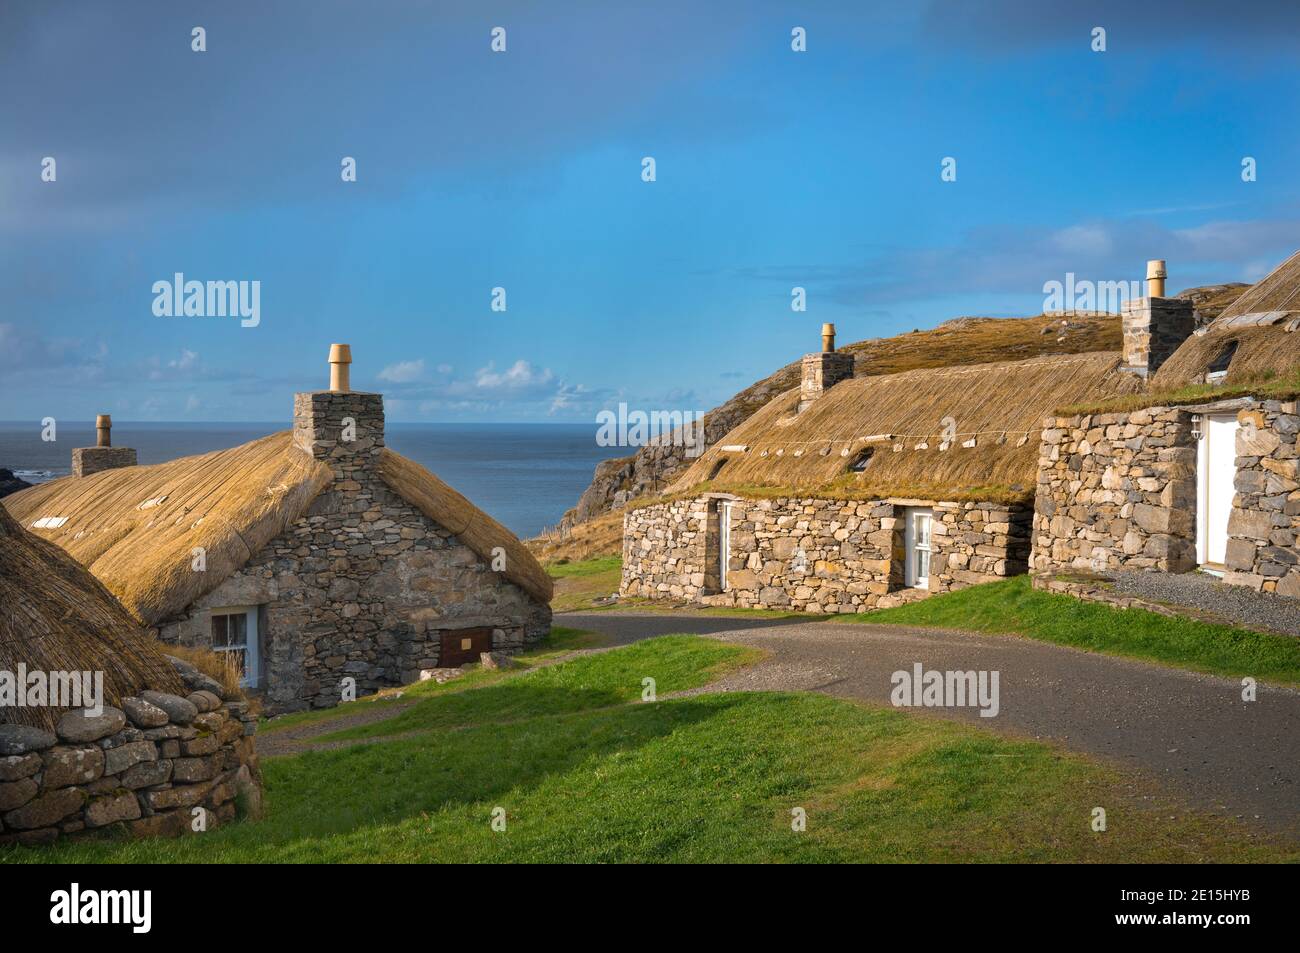 Isle of Lewis, Scotland: Garenin Blackhouse Village, a restored crofting village Stock Photo